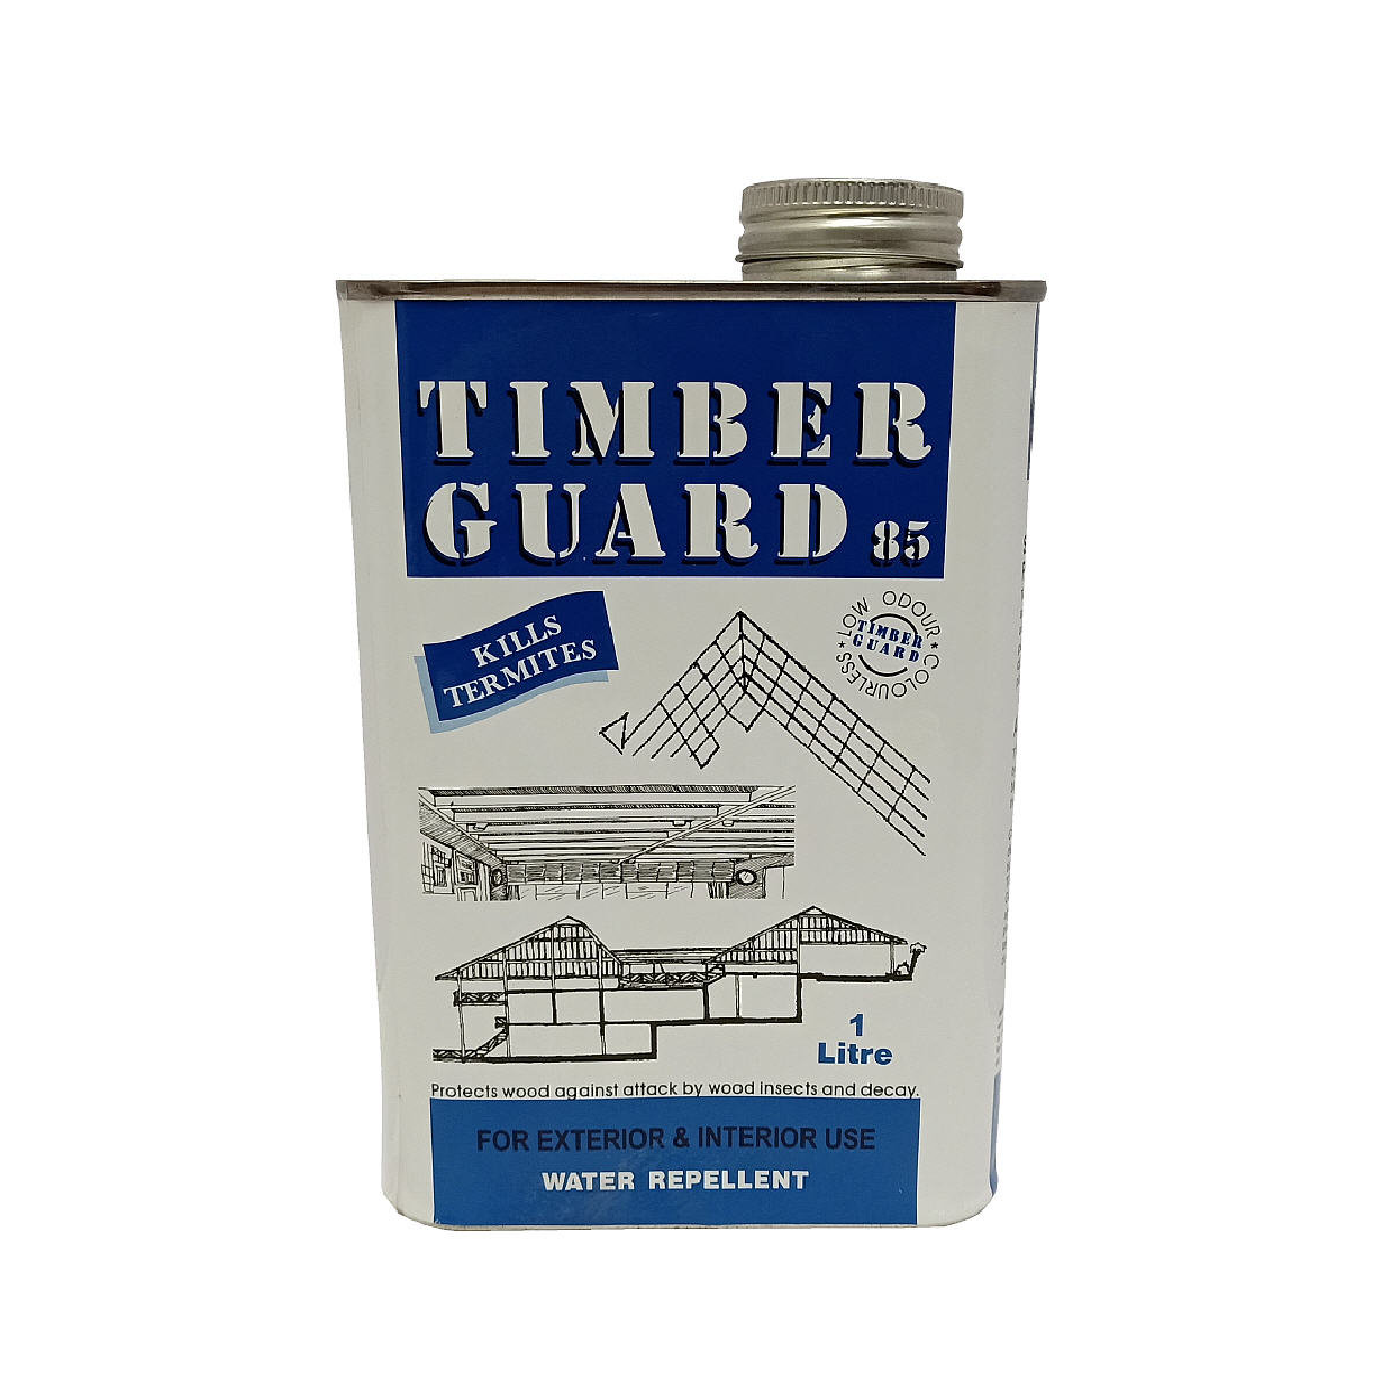 Timber Guard 85 Wood Preservatives Water Repellent (Attacks Termites)